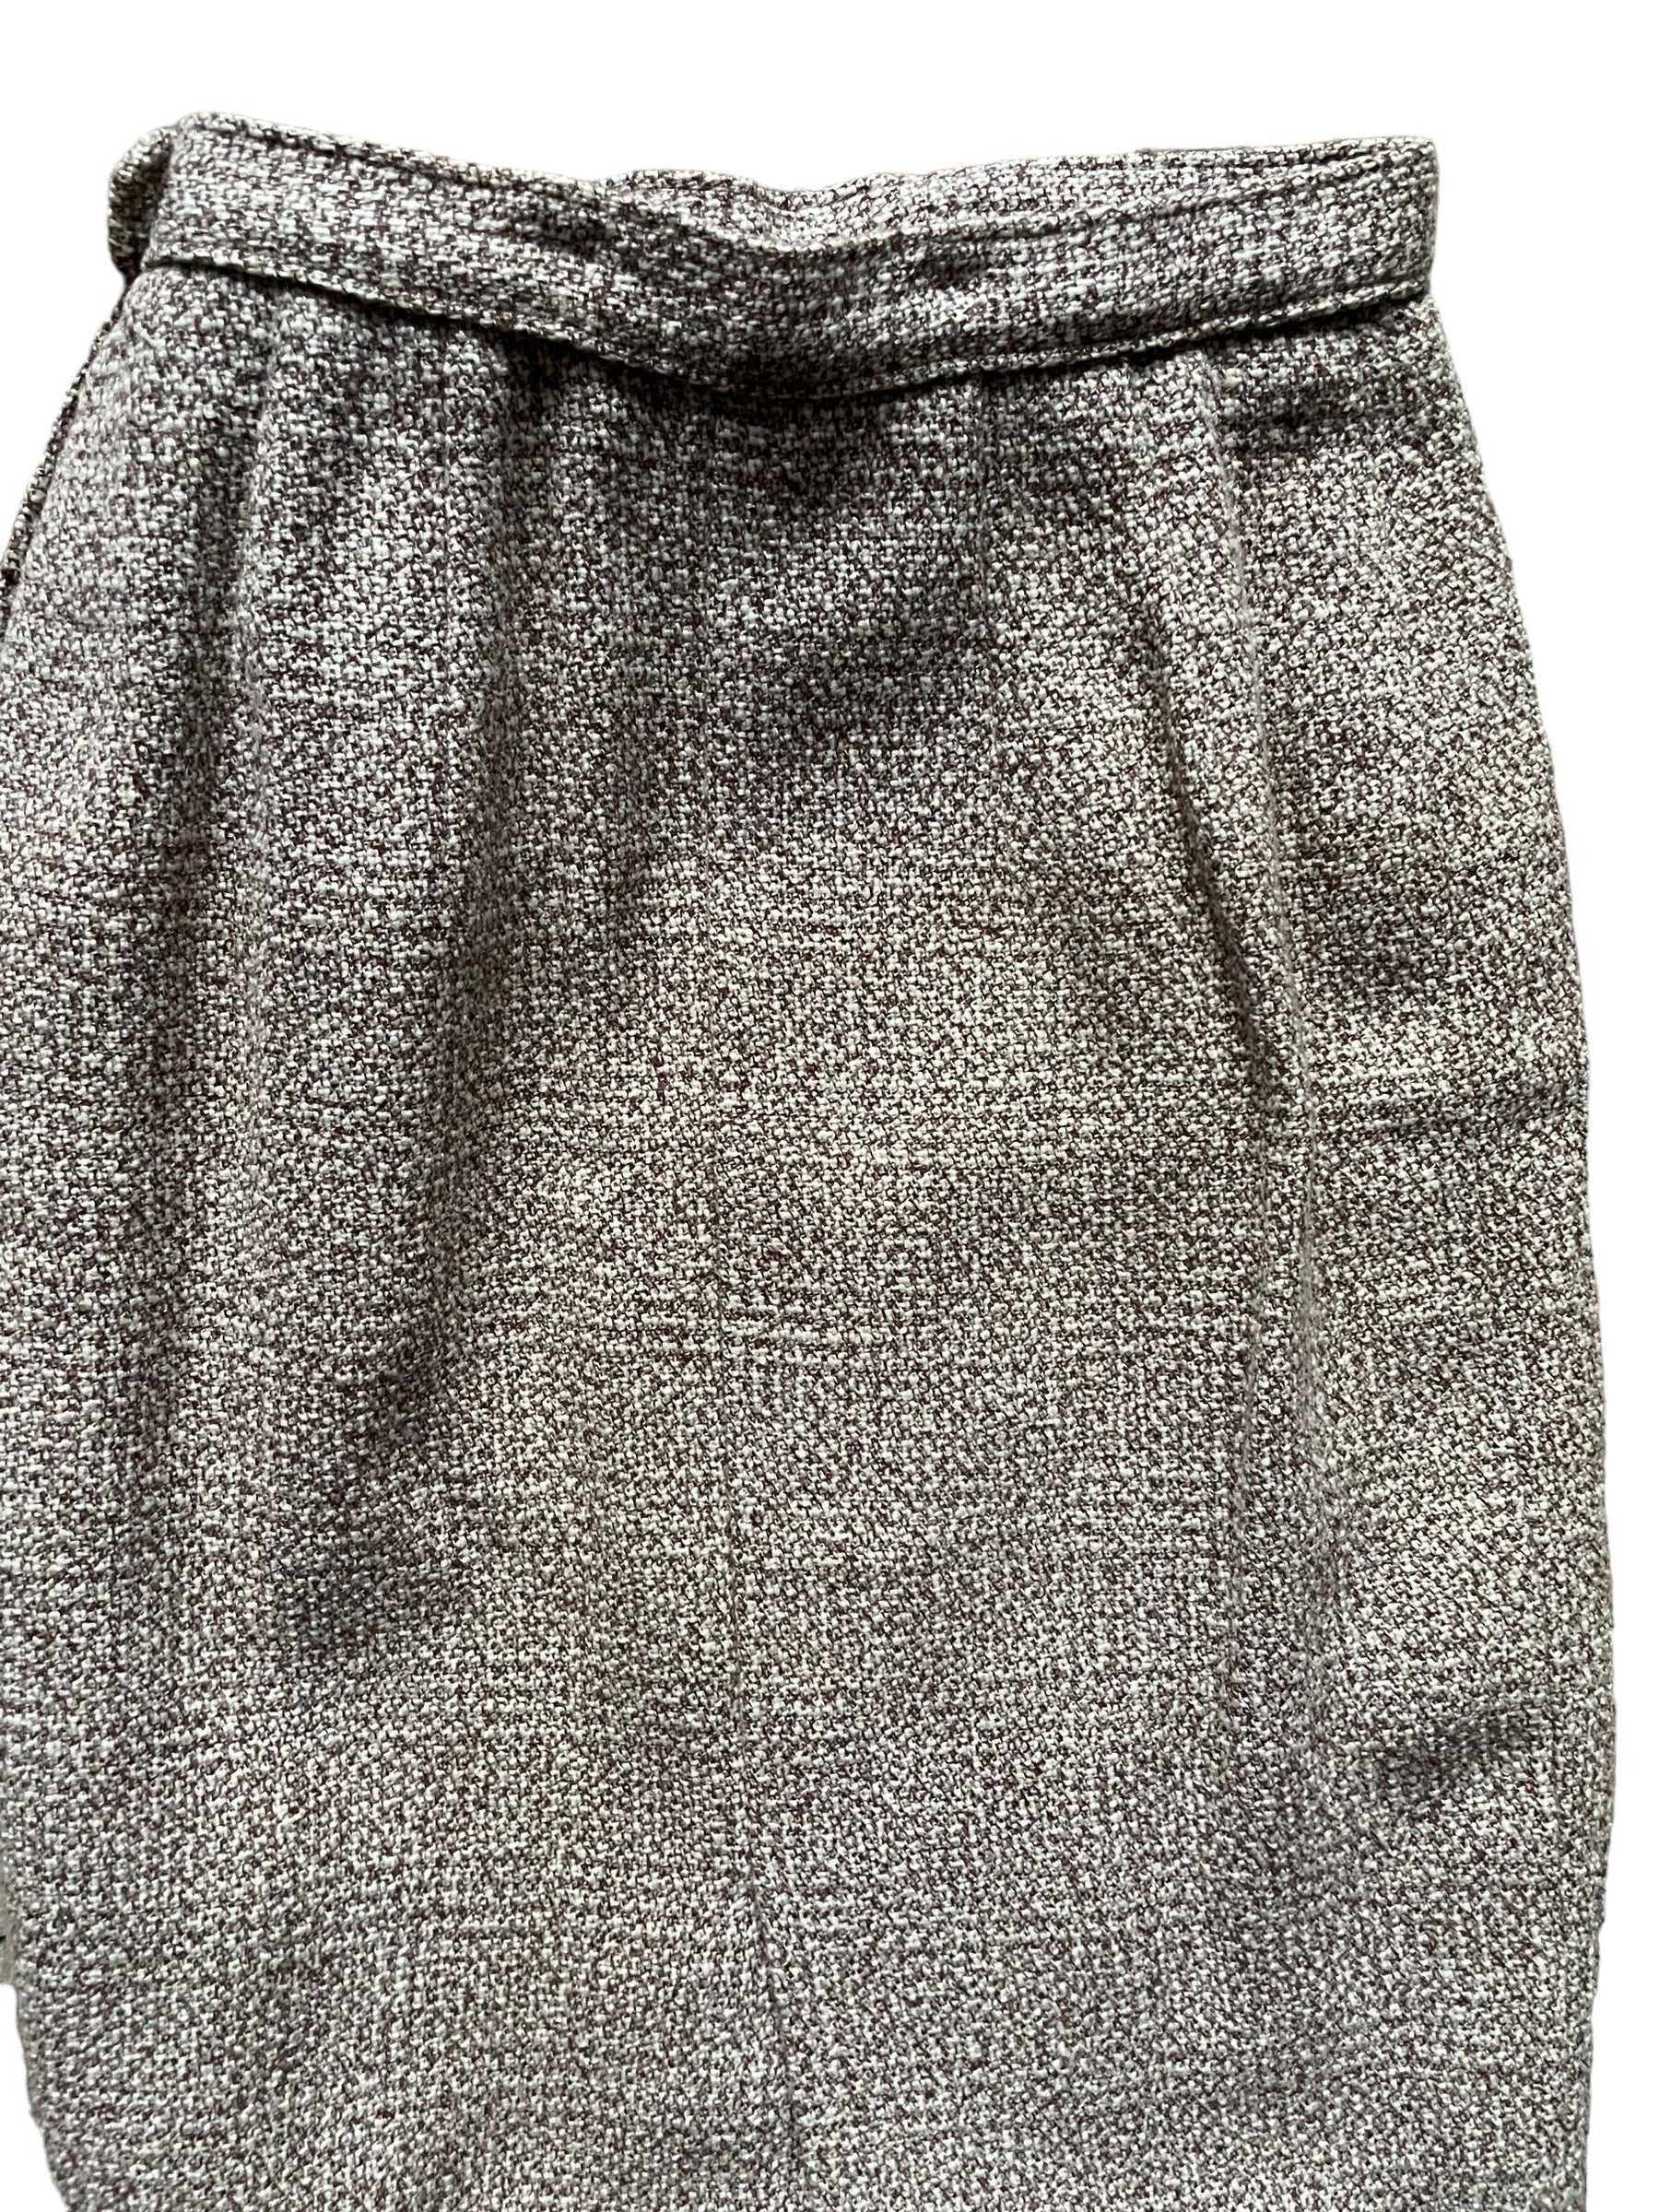 Back waist of skirt Vintage 1950s Wool Skirt and Top Set SZ M  |  Barn Owl Vintage Skirt Sets | Seattle Vintage Skirts